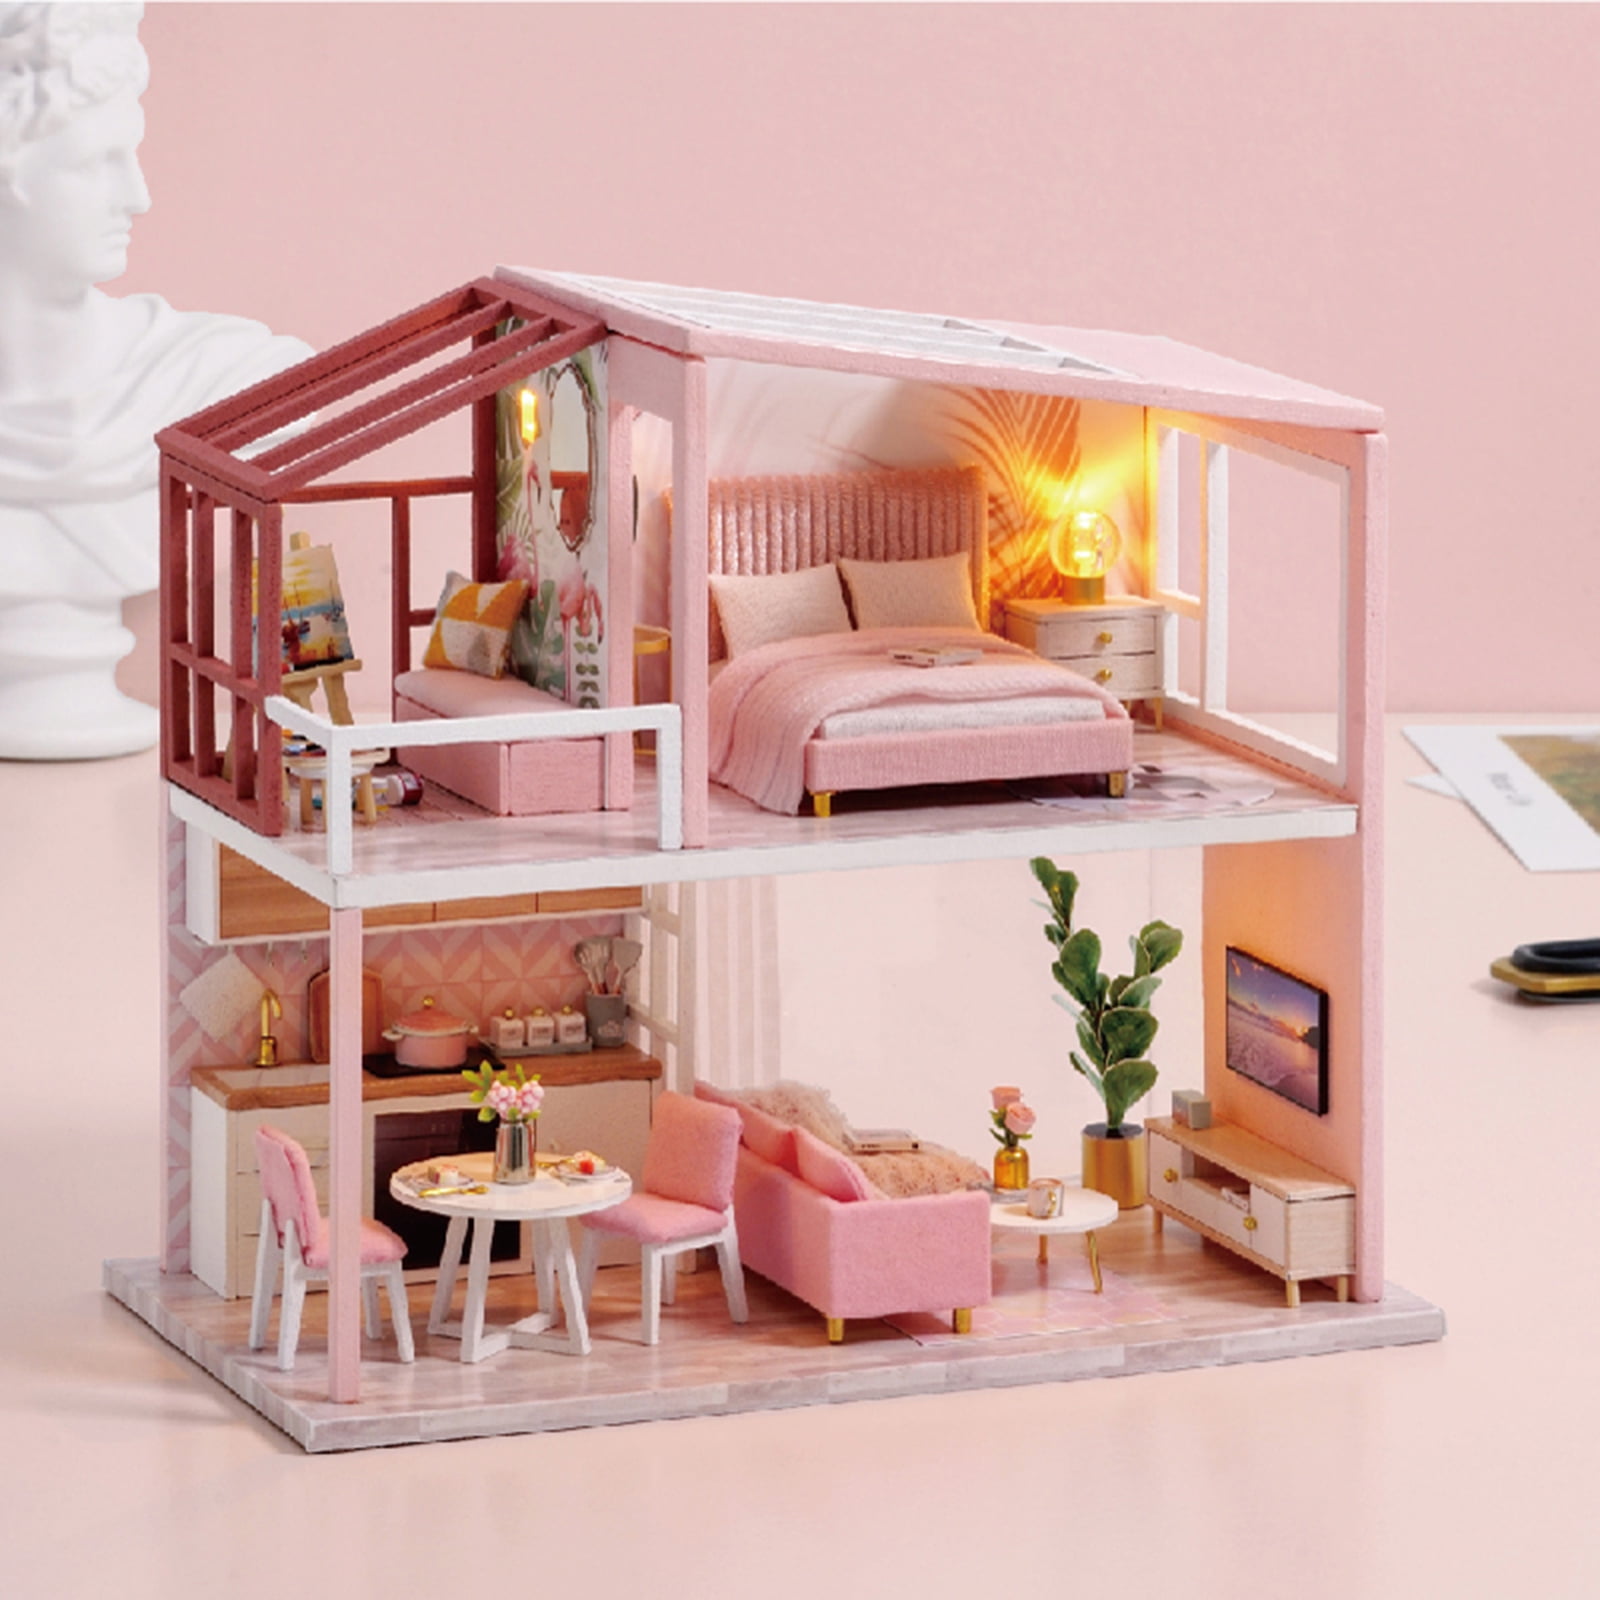 1/24 DIY Doll House Wooden Doll Houses Miniature Dollhouse Furniture Kit Toys 